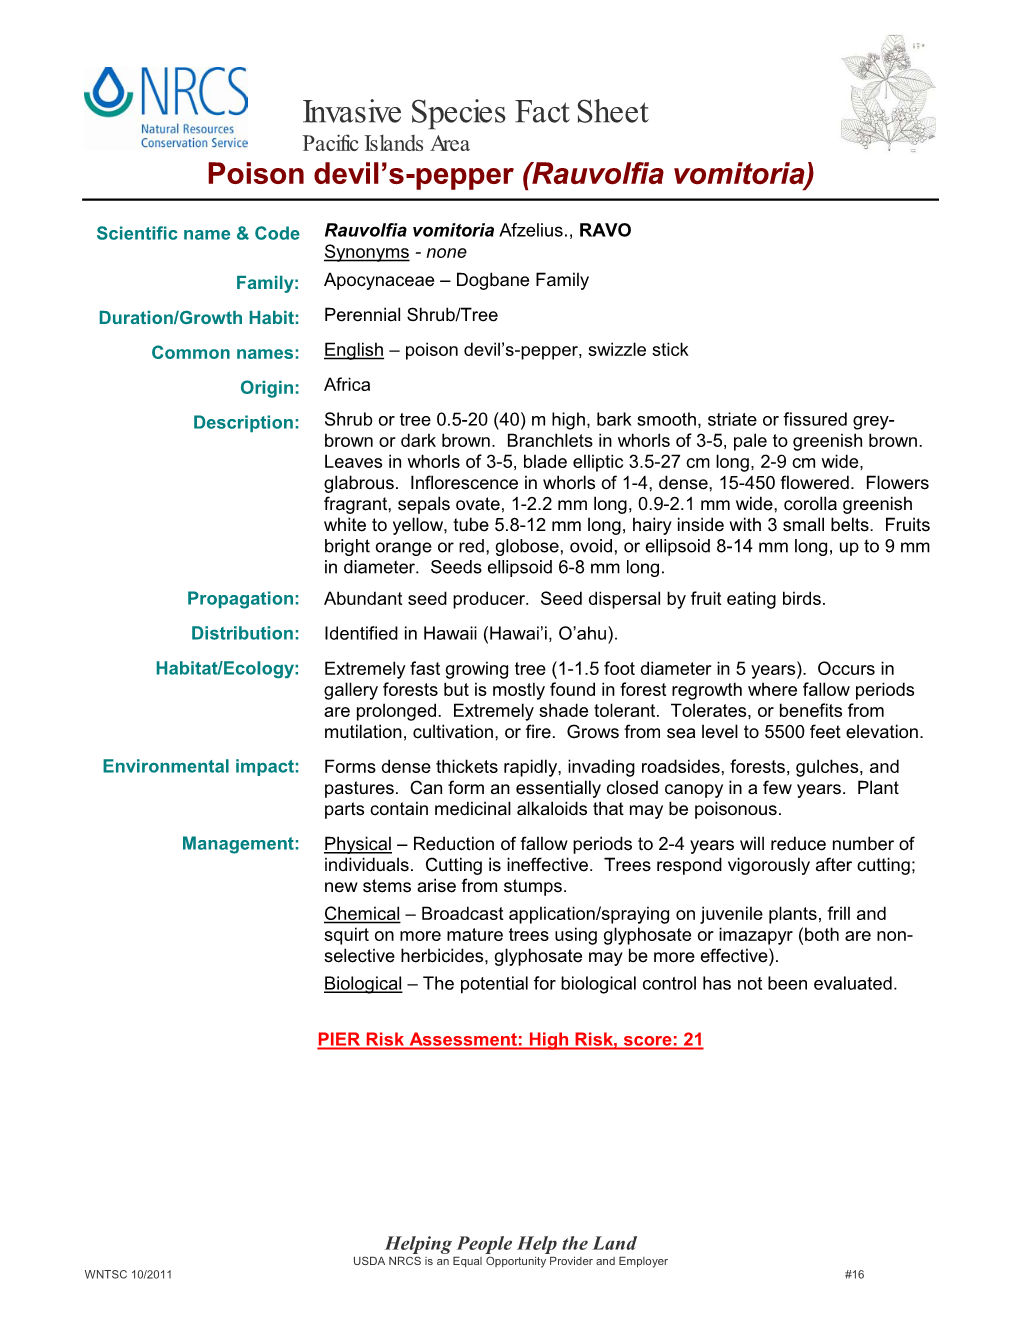 Poison Devil's Pepper (Rauvolfia Vomitoria)